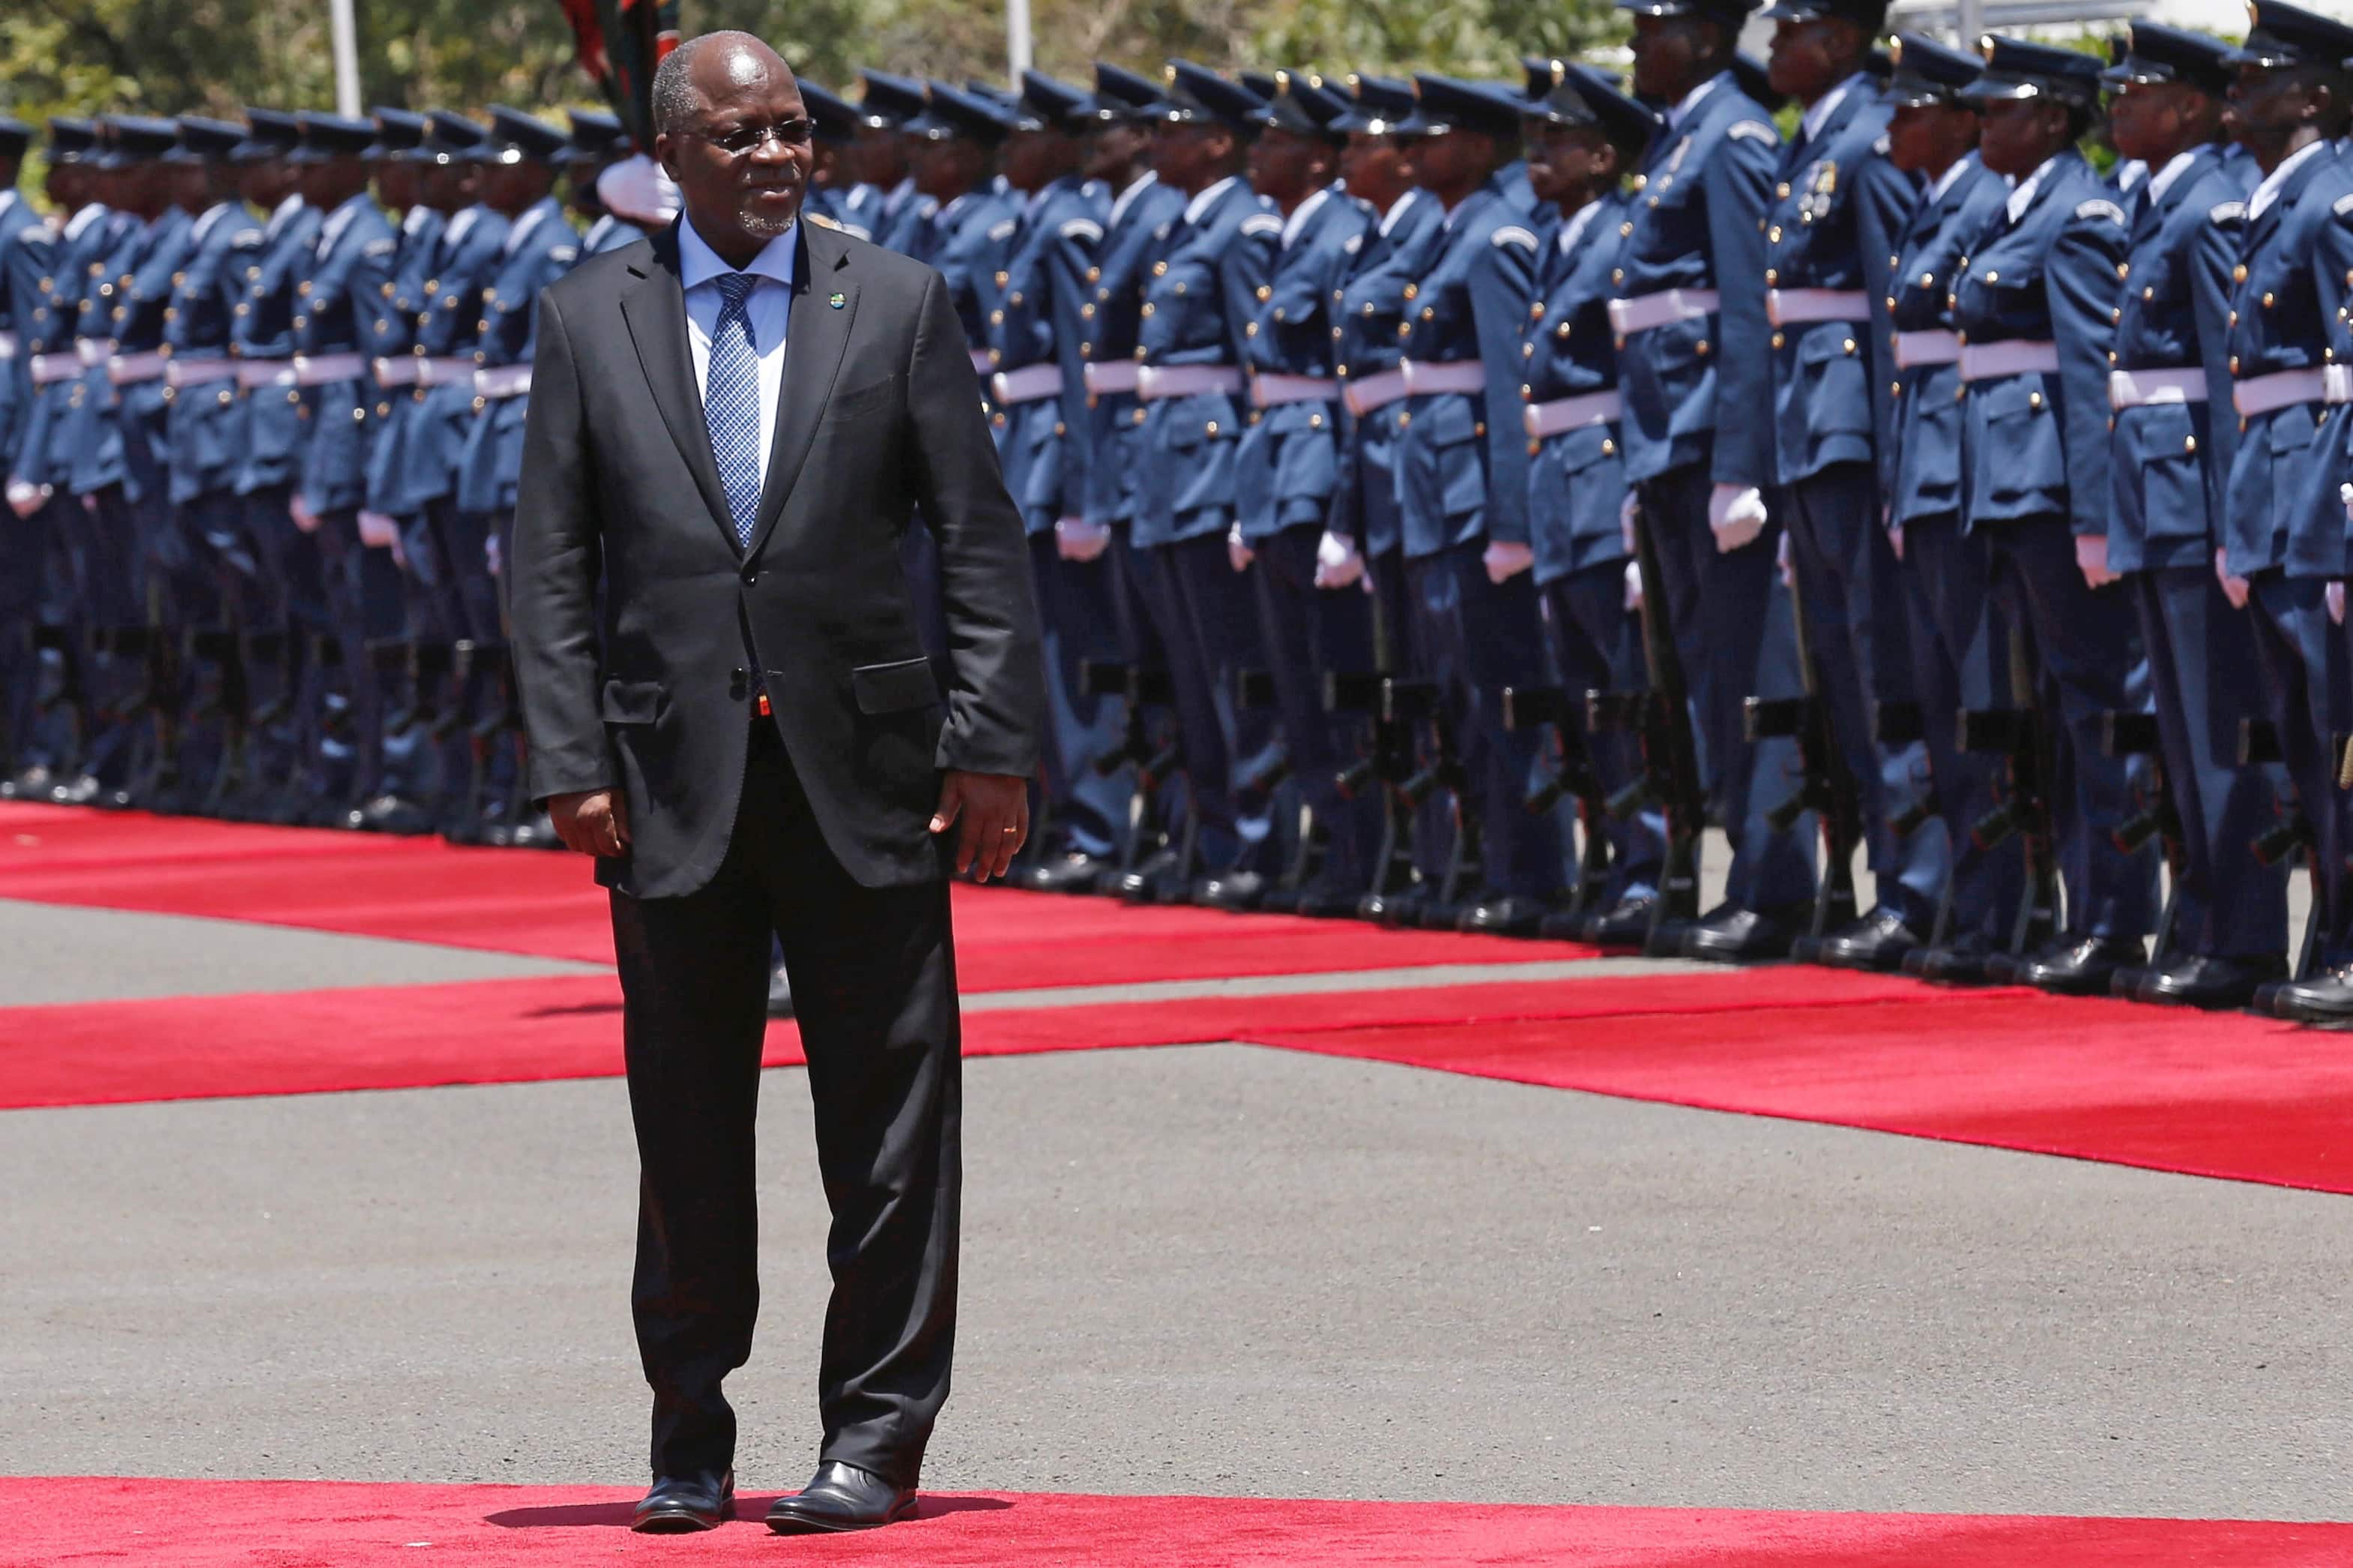 Tanzania's President John Magufuli leaves after inspecting a guard of honour during his official visit to Nairobi, Kenya, 31 October 2016, REUTERS/Thomas Mukoya